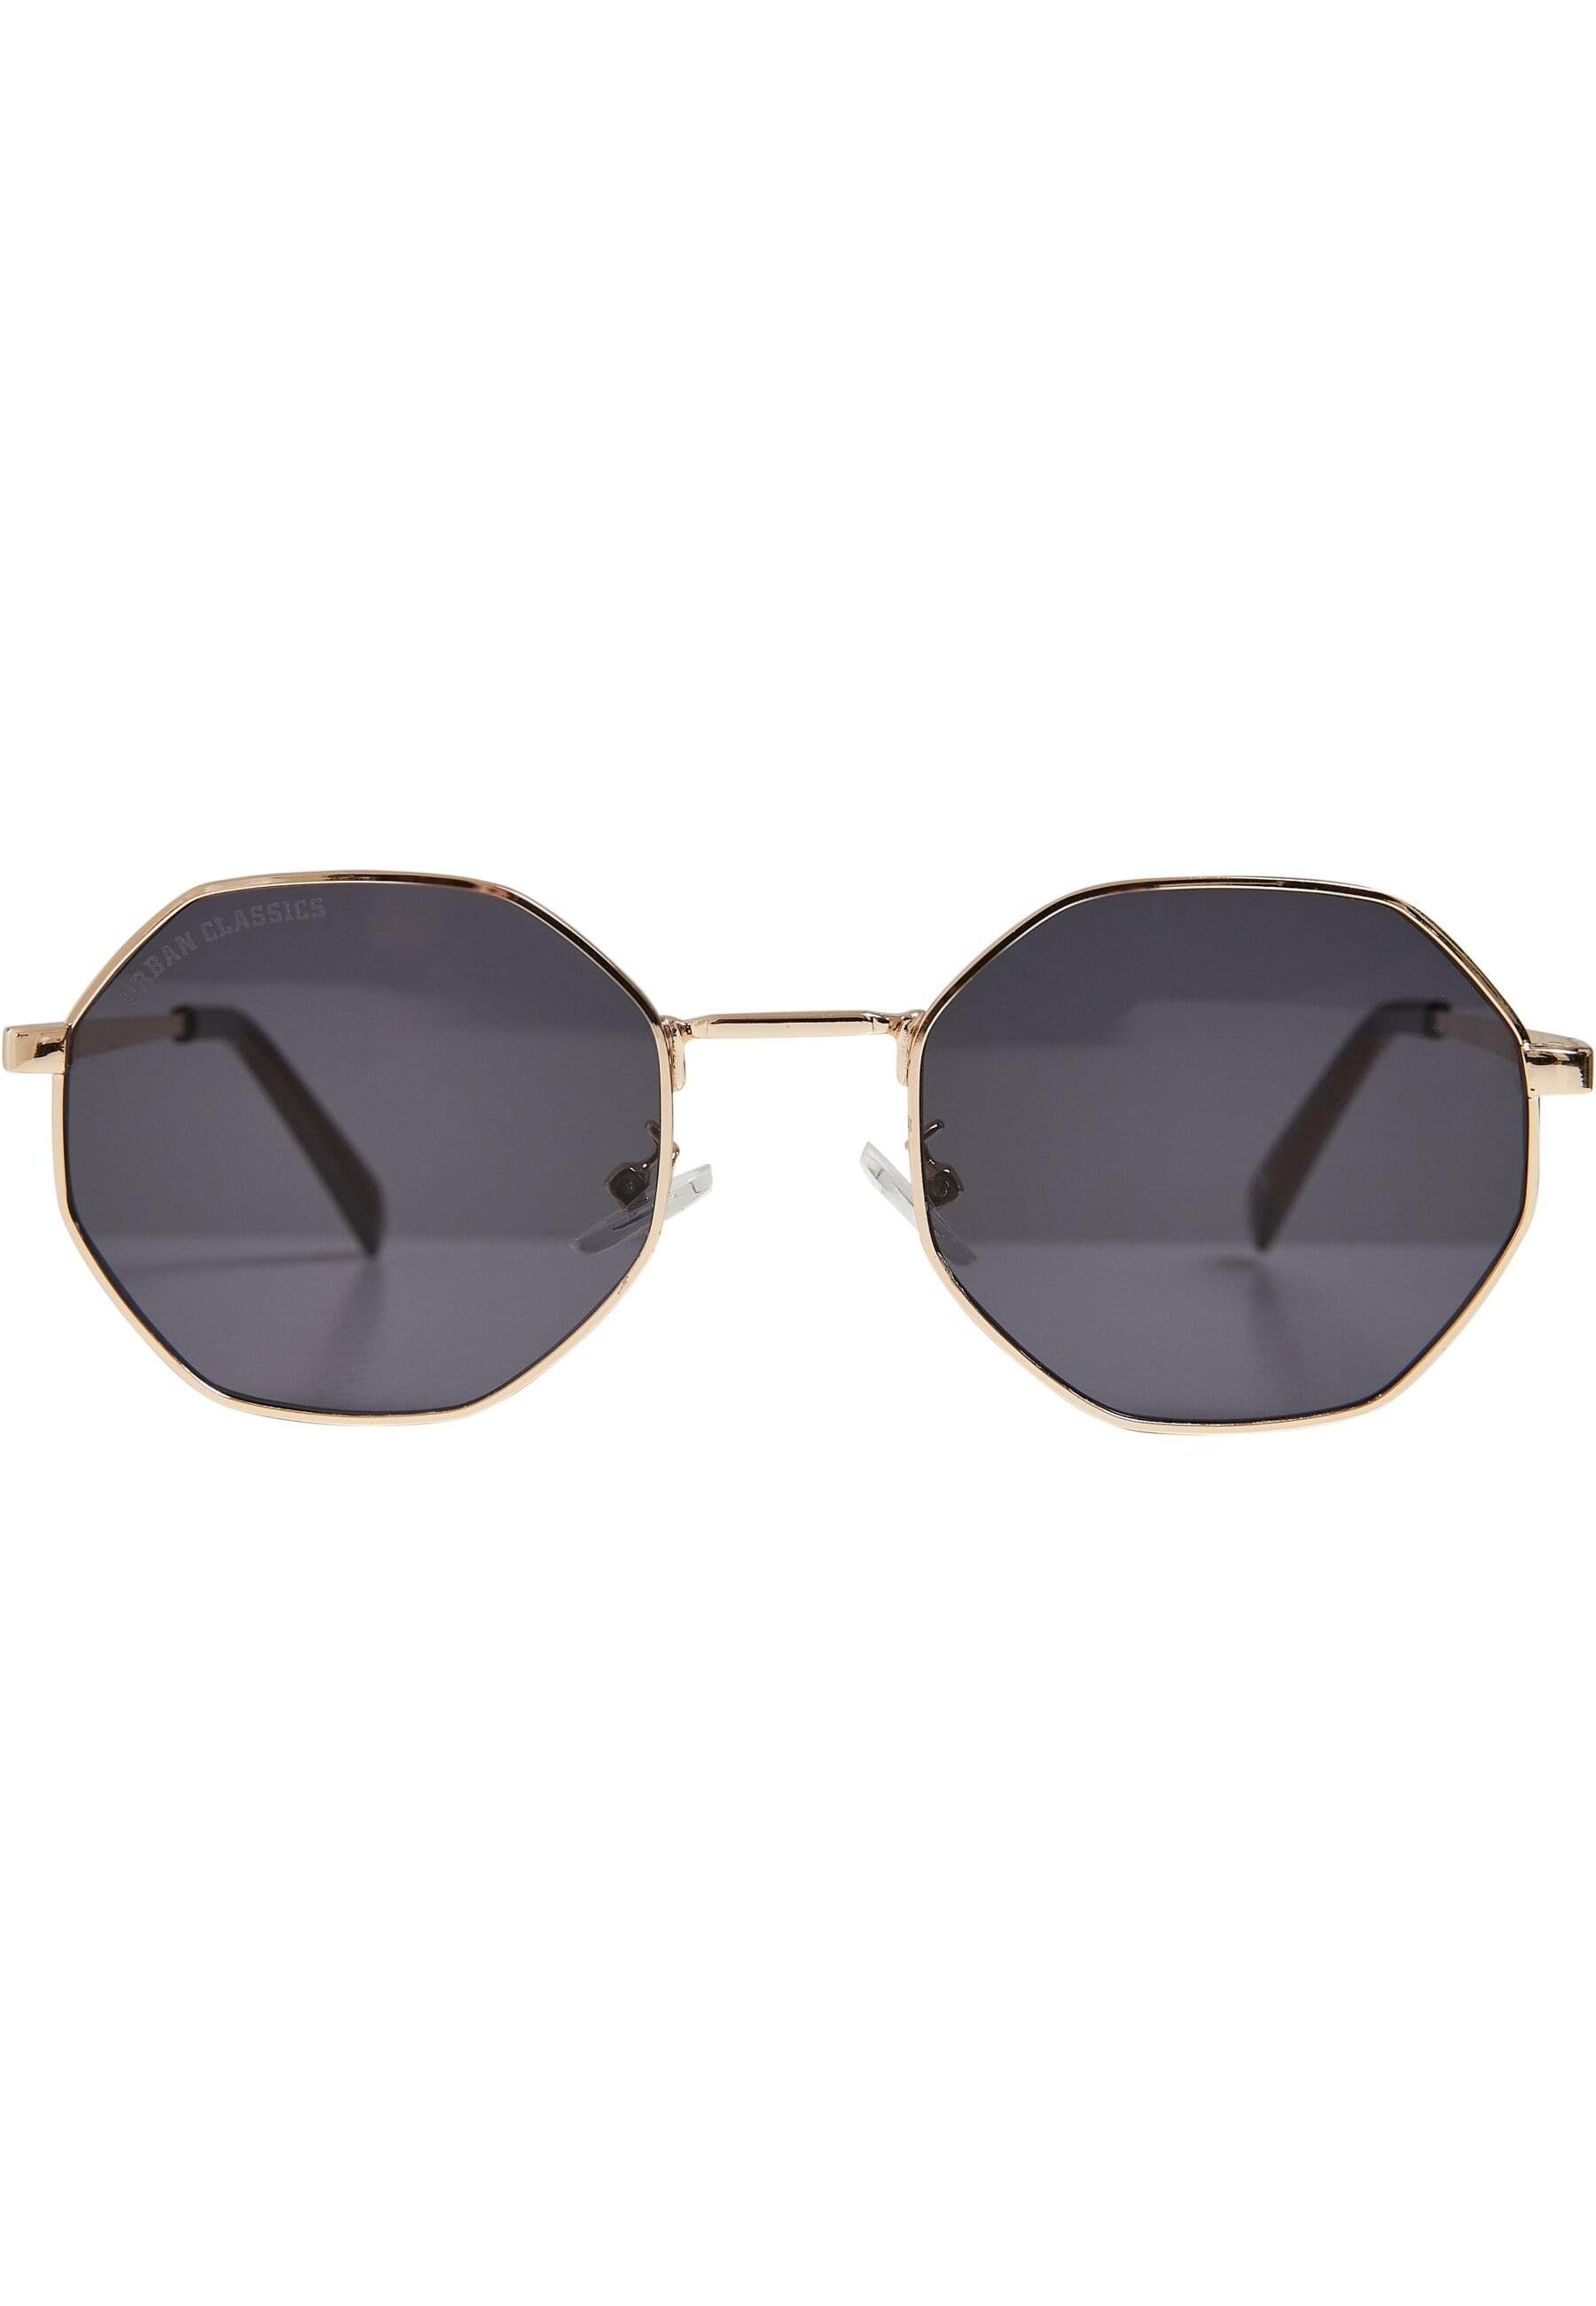 Sunglasses Sonnenbrille CLASSICS black/gold URBAN Unisex Toronto